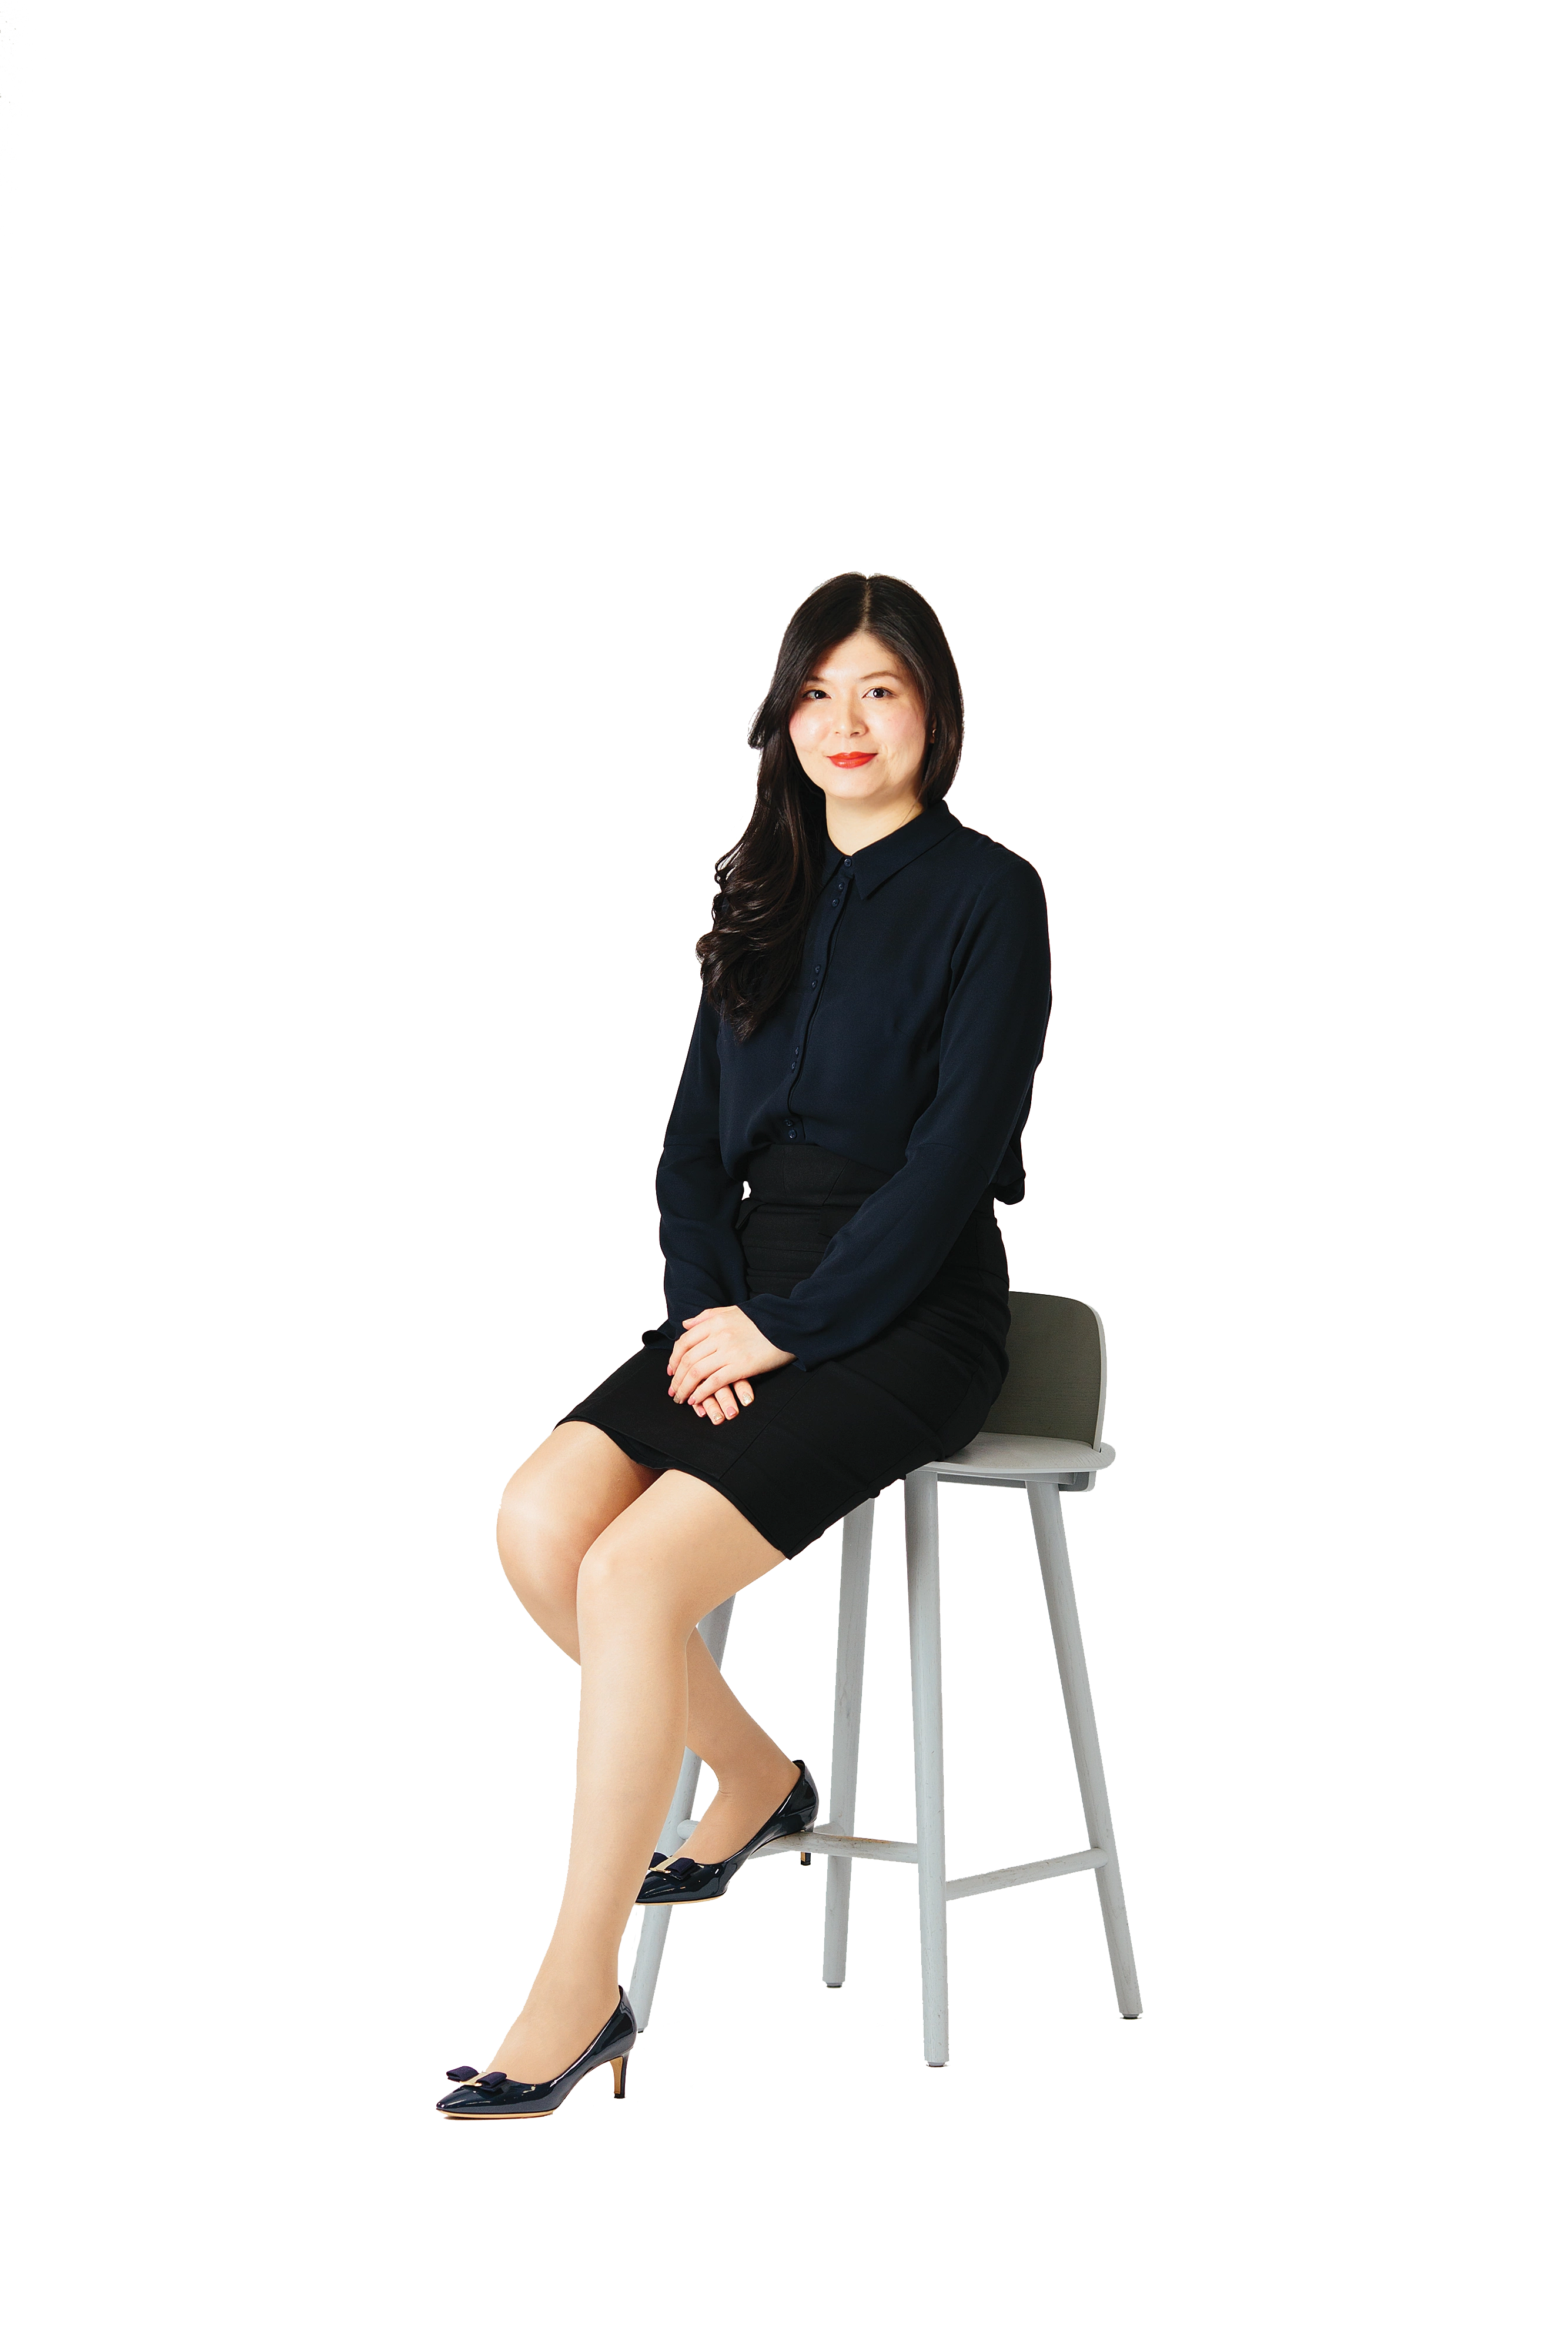 Sophia Zhu Real Estate Agent